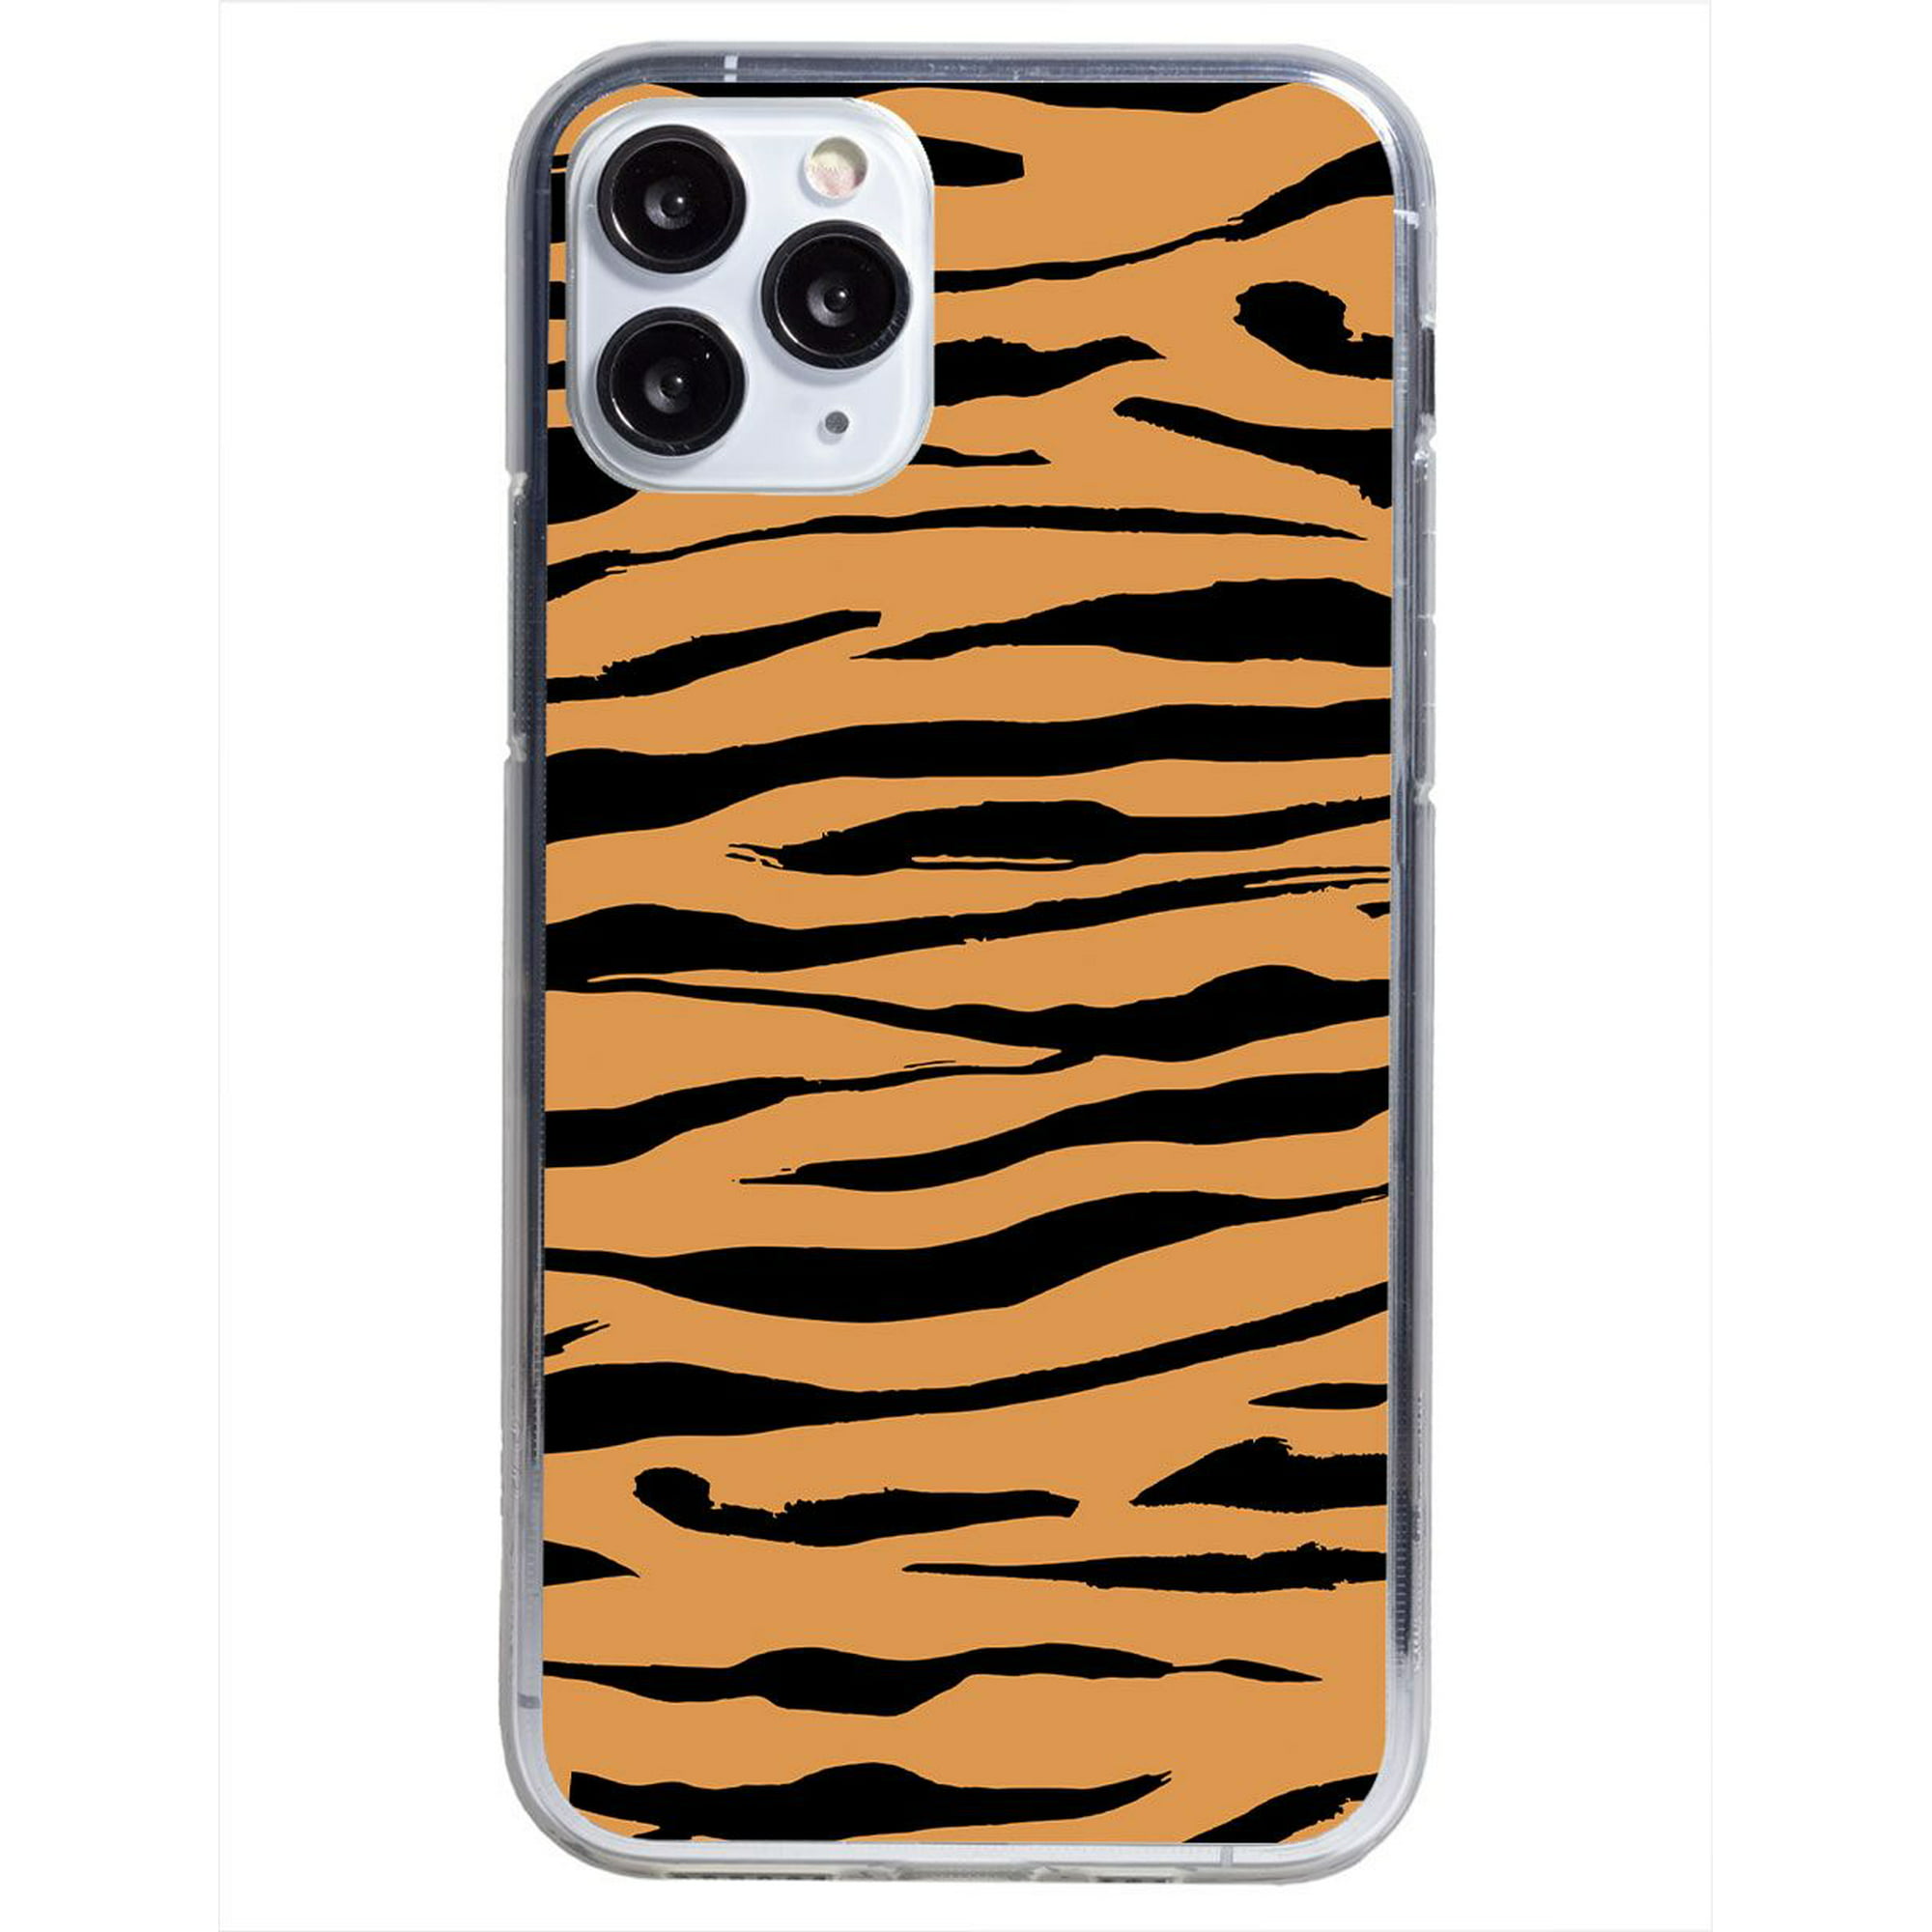 Funda para iphone 11 pro max tigre animal print, uso rudo, instacase protector para iphone 11 pro max antigolpes, case tigre animal print